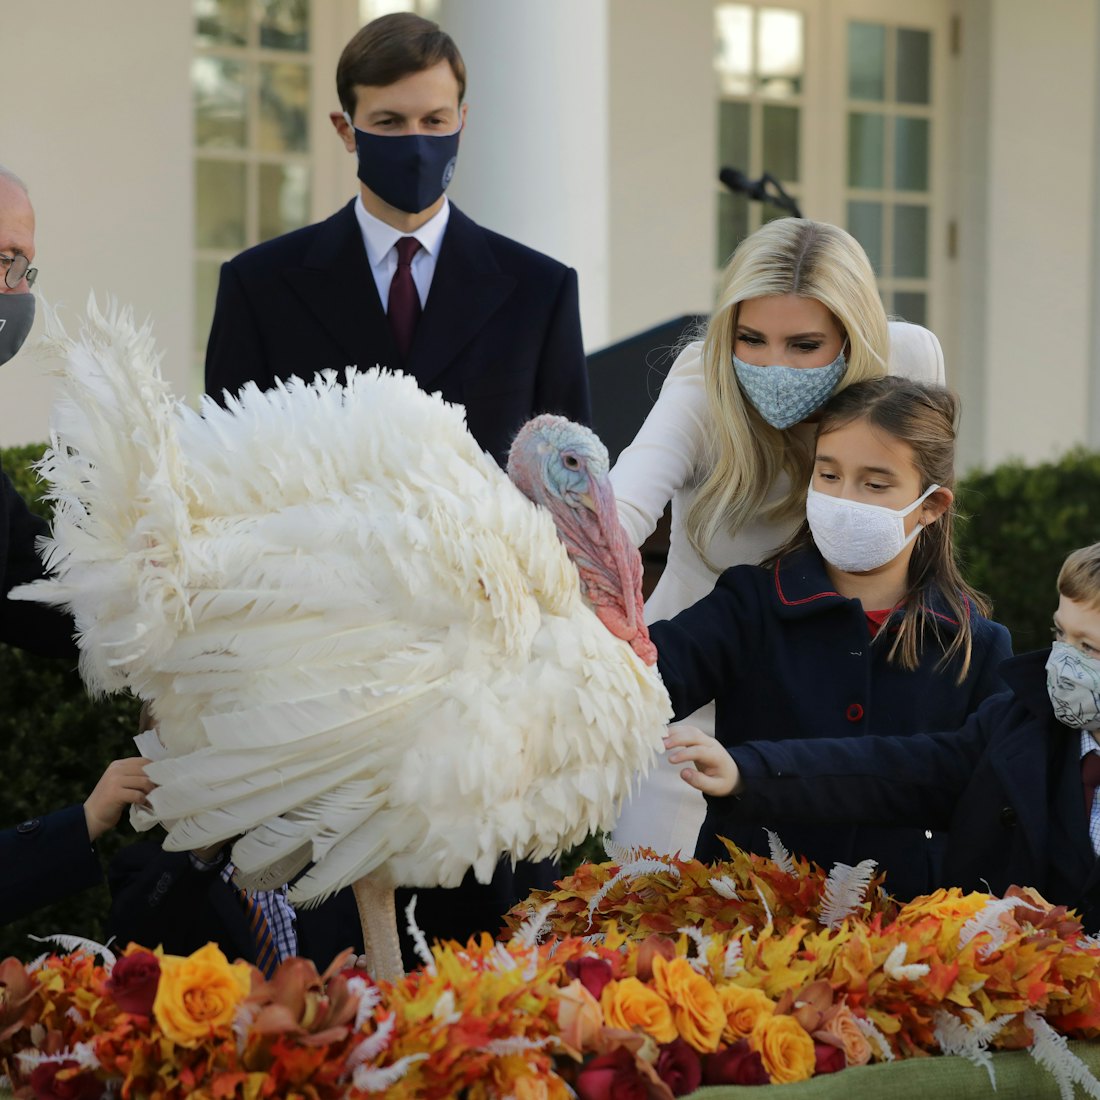 The 2020 presidential turkey pardon